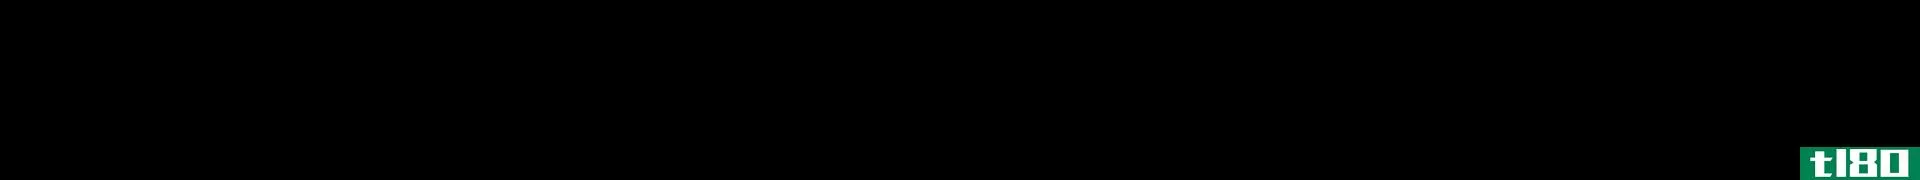 十六醇(cetyl alcohol)和硬脂醇(stearyl alcohol)的区别